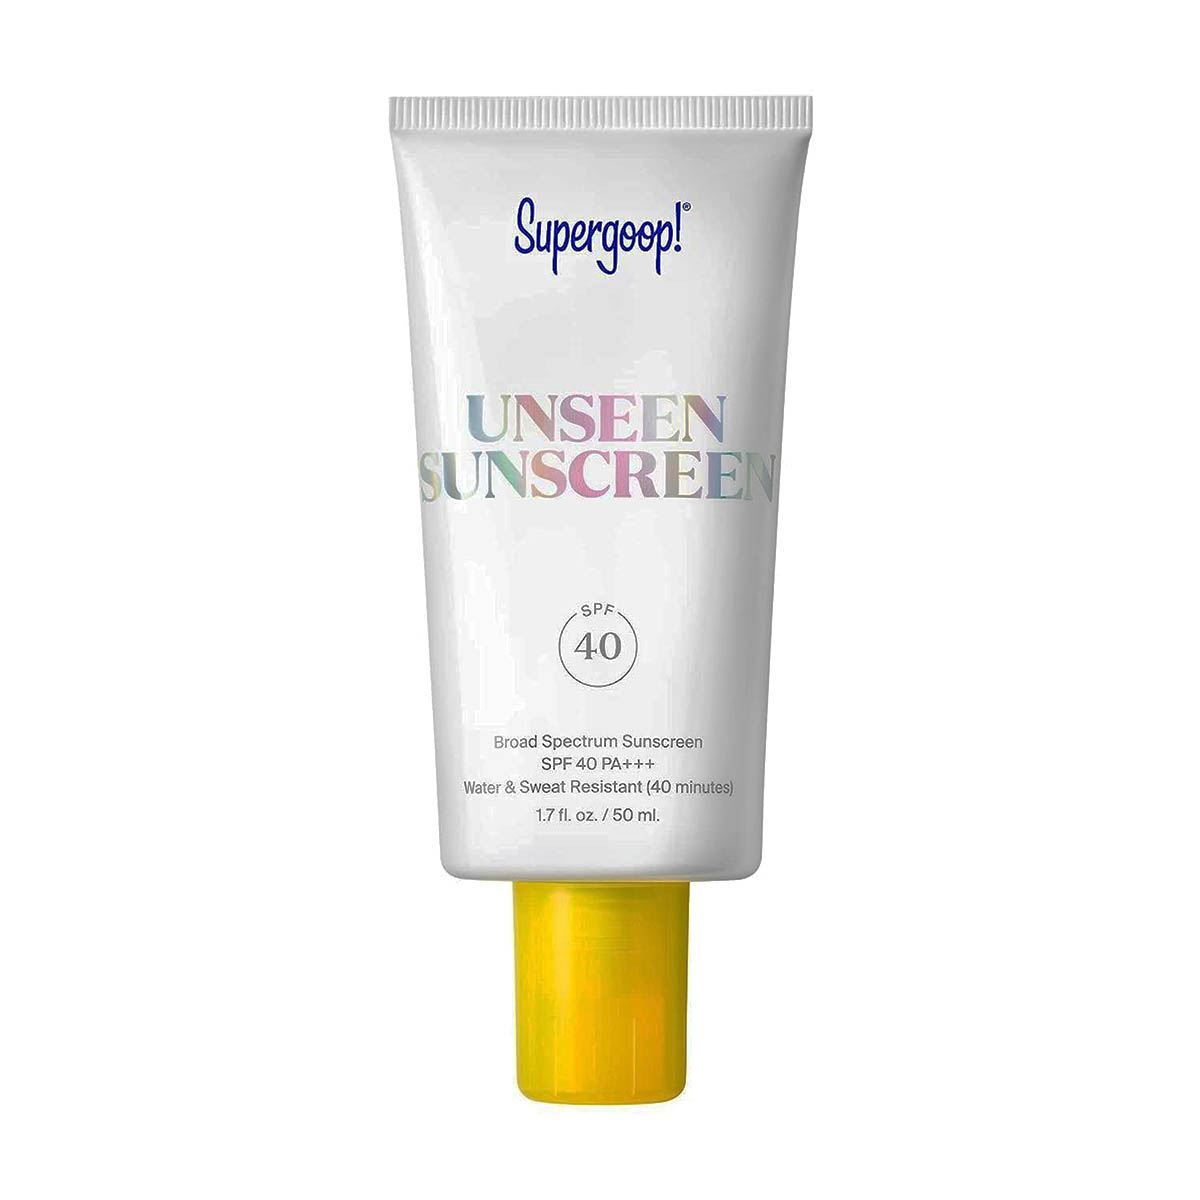 Supergoop! Unseen Sunscreen - SPF 40-1.7 fl oz - Invisible, Broad Spectrum Face Sunscreen